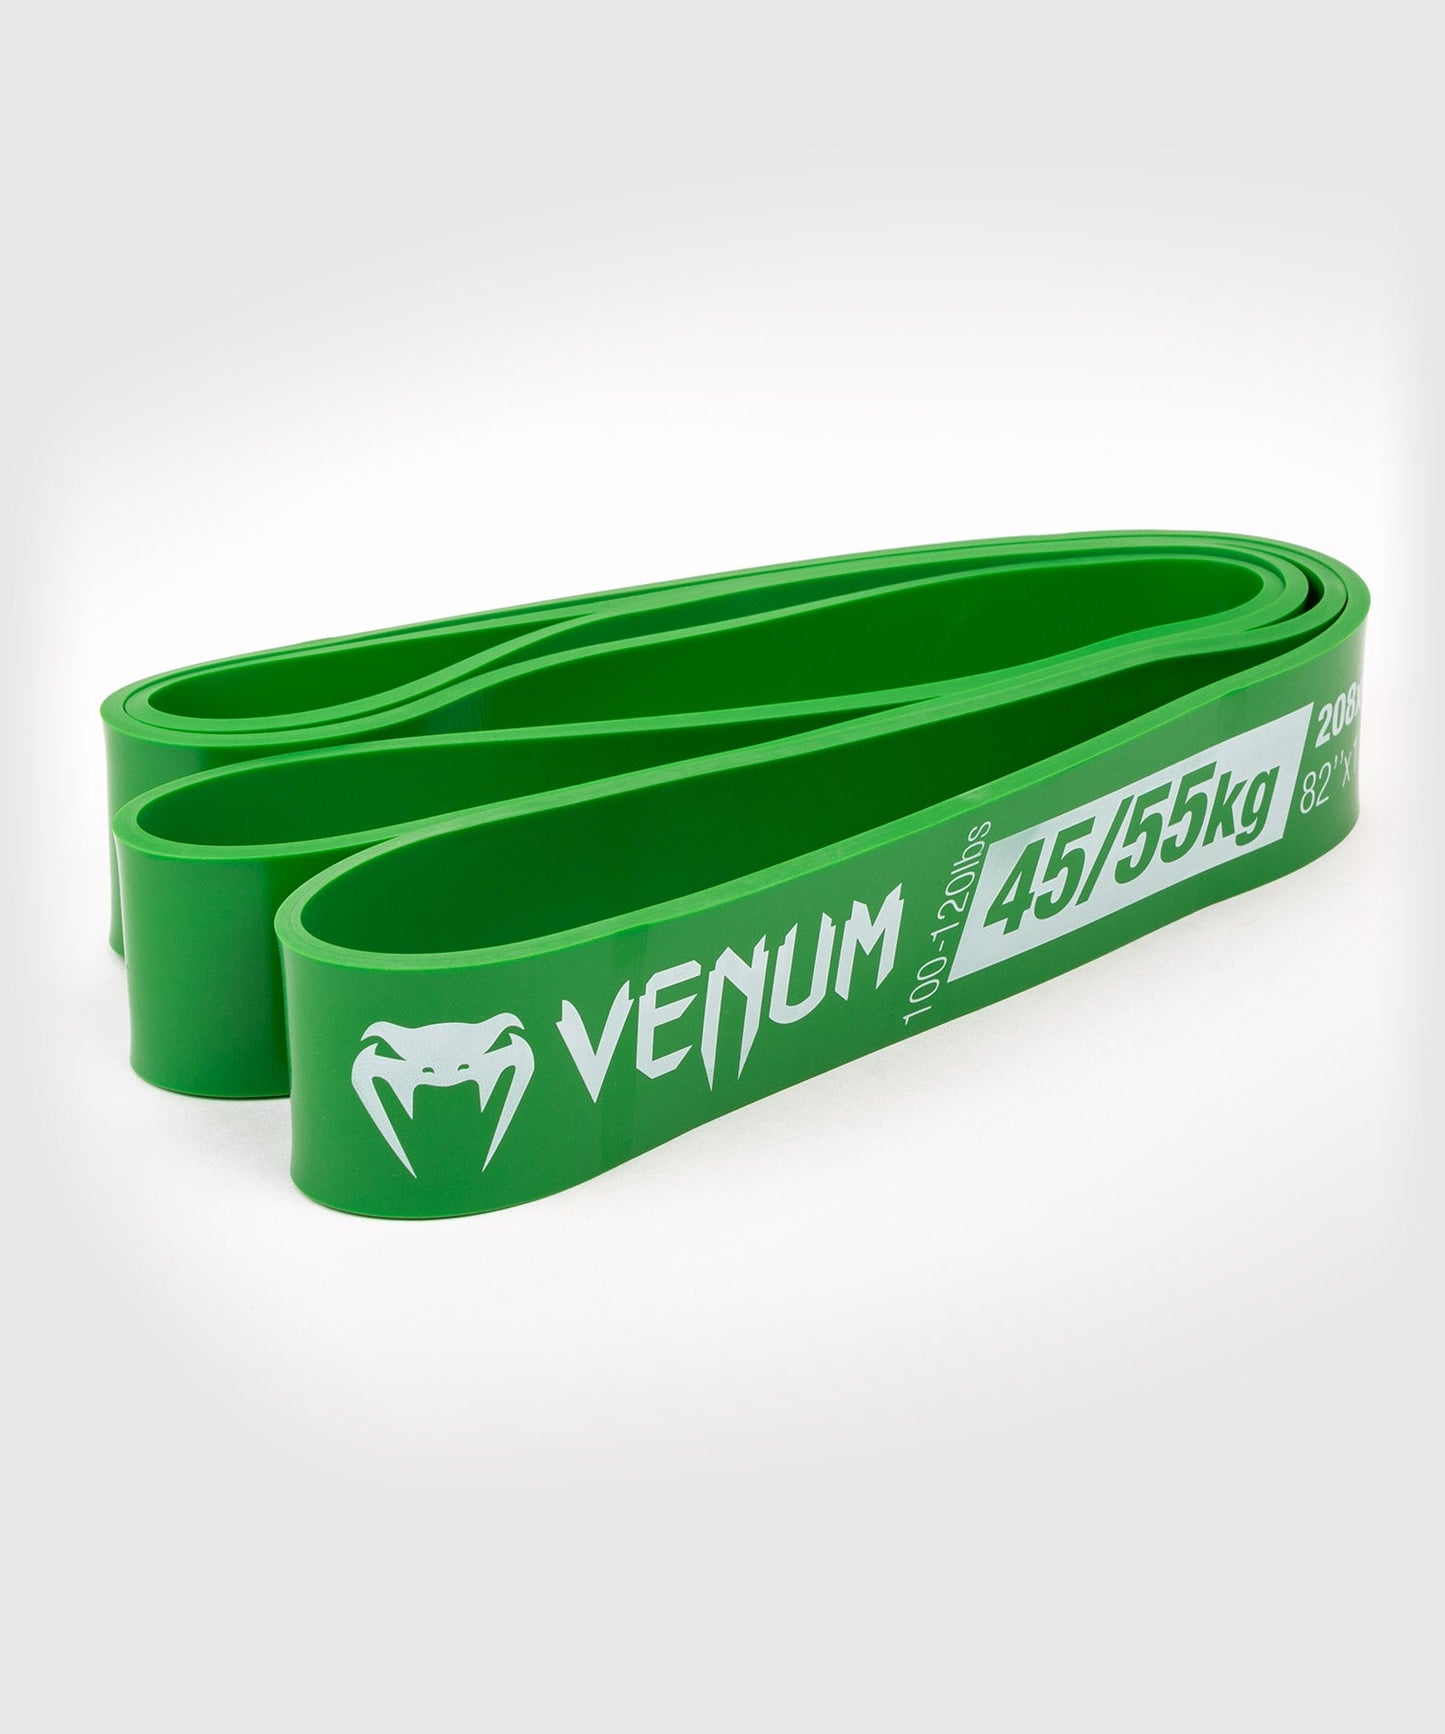 Venum Challenger Resistance Band - Green - 100-120lbs